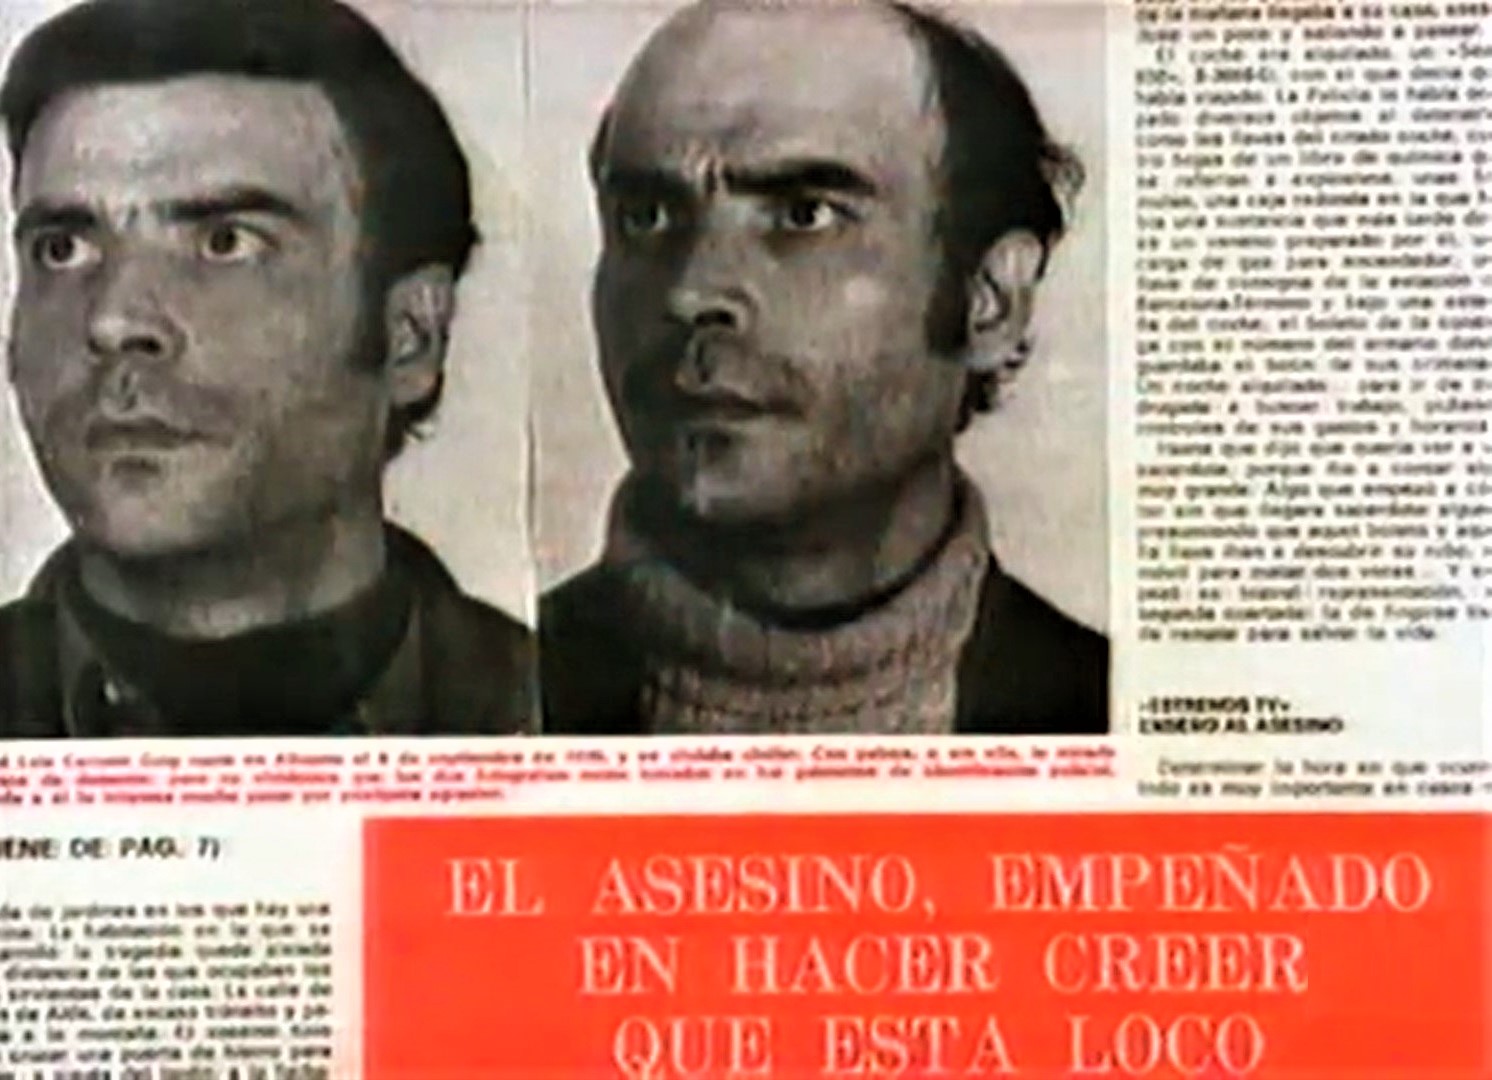 Jose Luis Cerveto assassin de Pedralbes